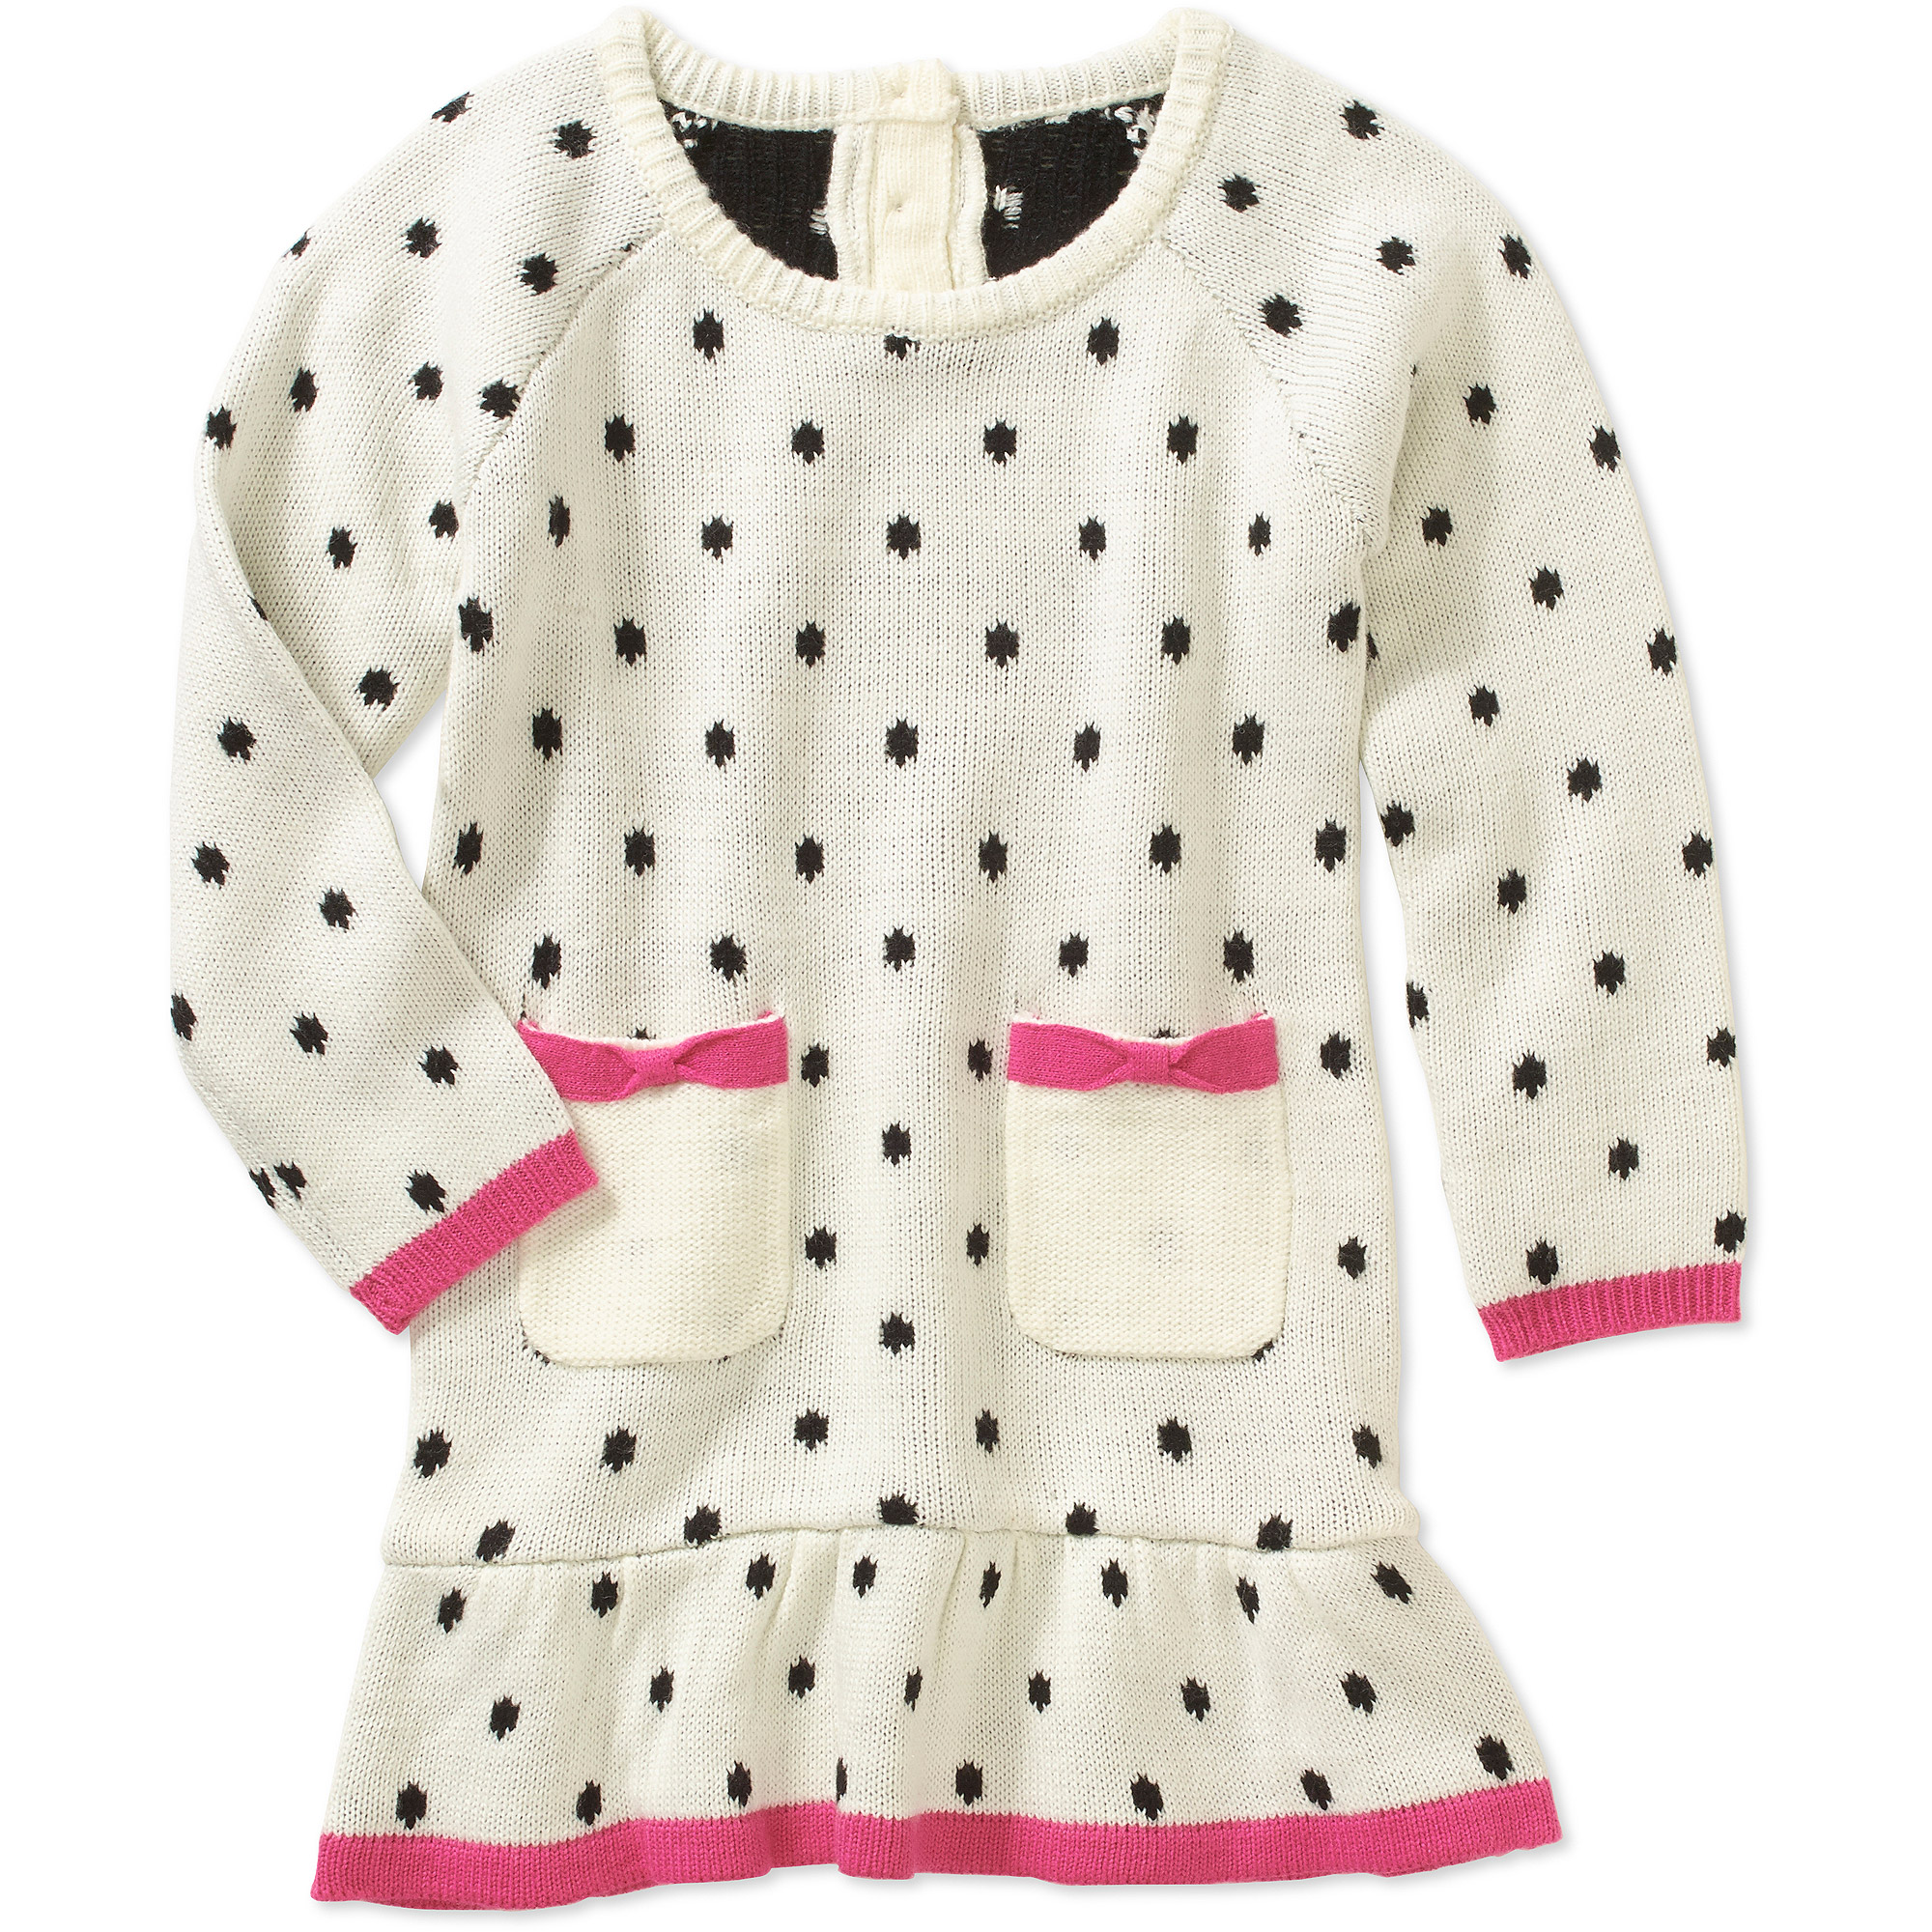 Healthtex Infant Girl Sweater Dress - image 1 of 1